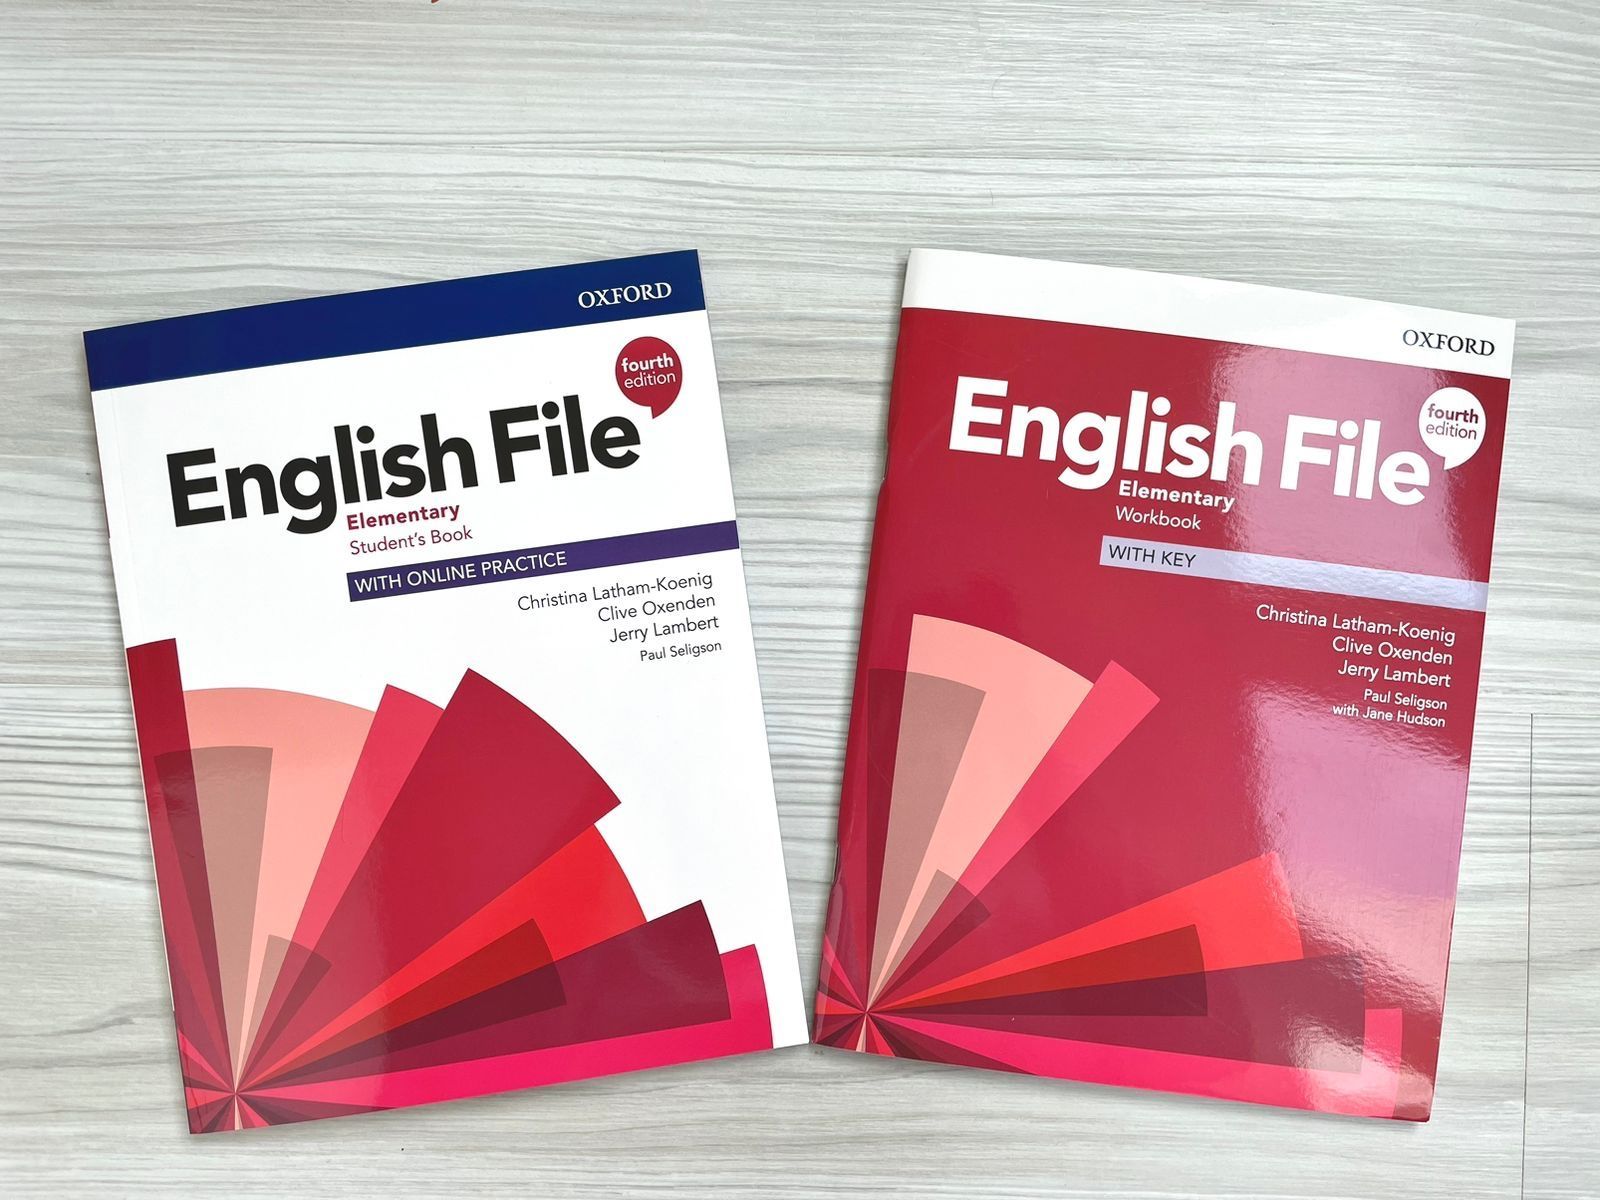 New english file elementary 4th. English file: Elementary. English file 4 Edition Elementary. English file Elementary Workbook fourth Edition. English file Elementary 4th Edition.